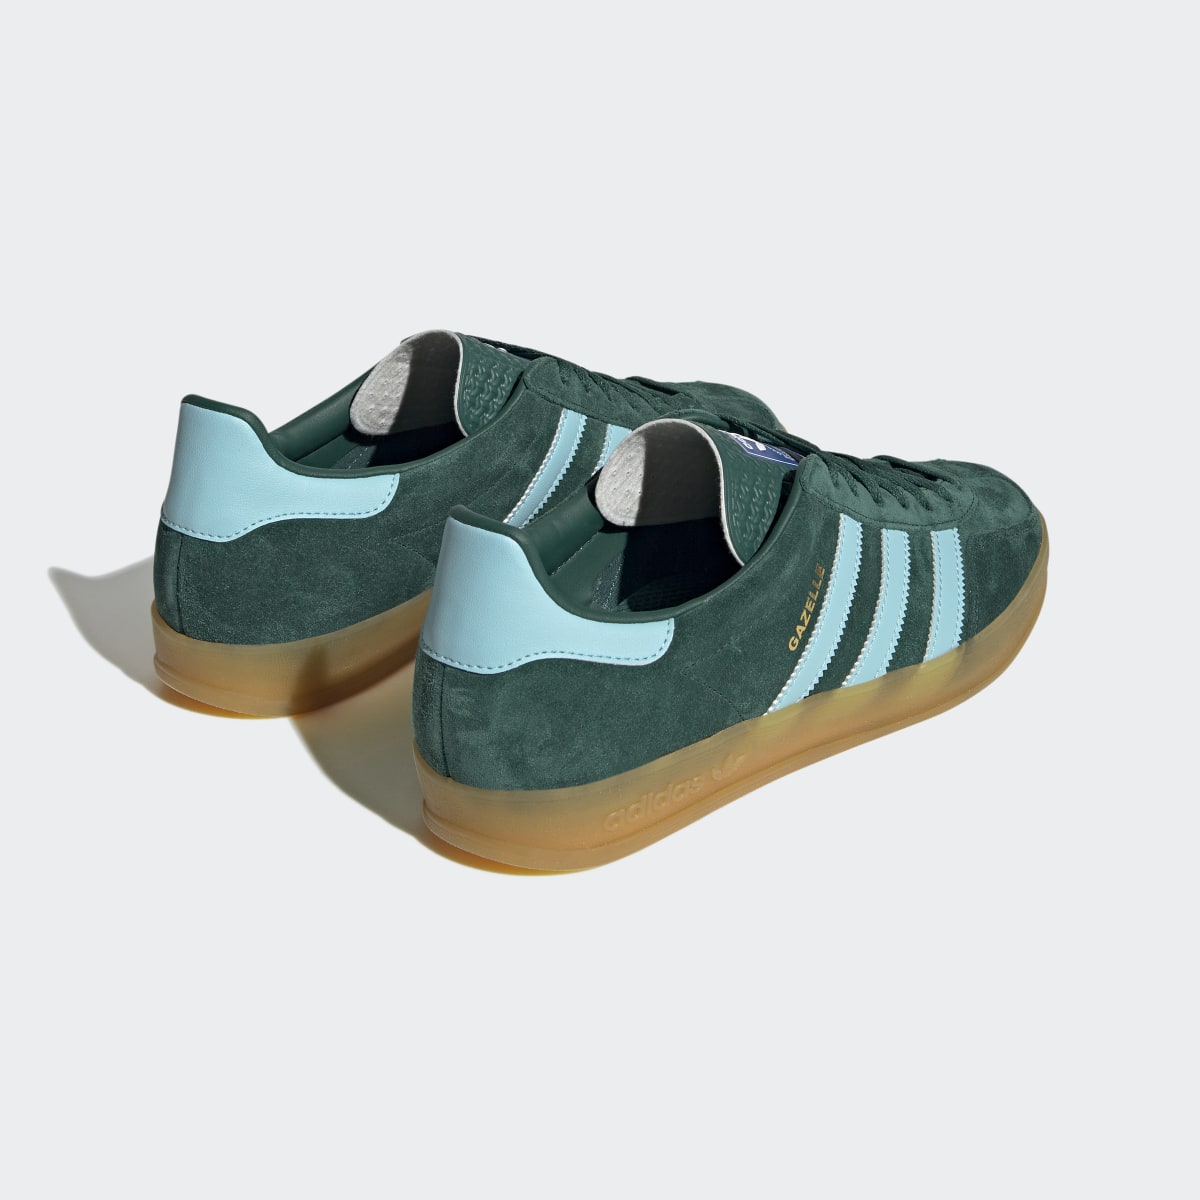 Adidas Gazelle Indoor Schuh. 6